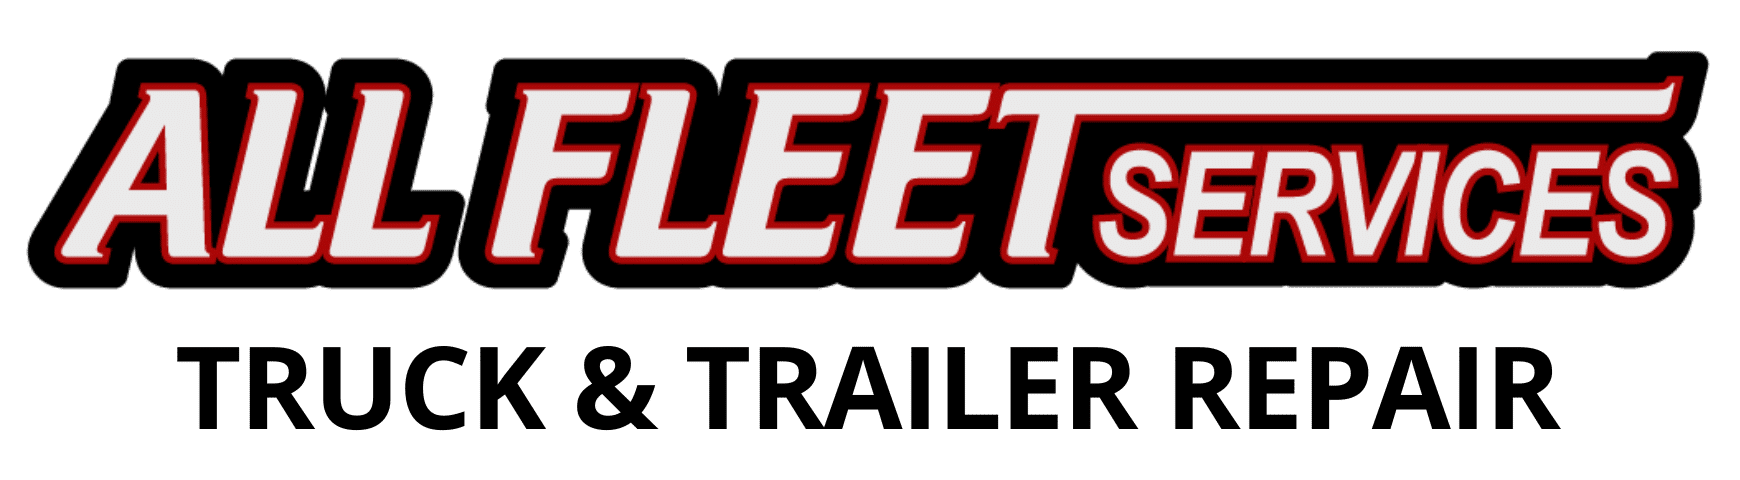 All Fleet Services - BlackRedWhite Logo